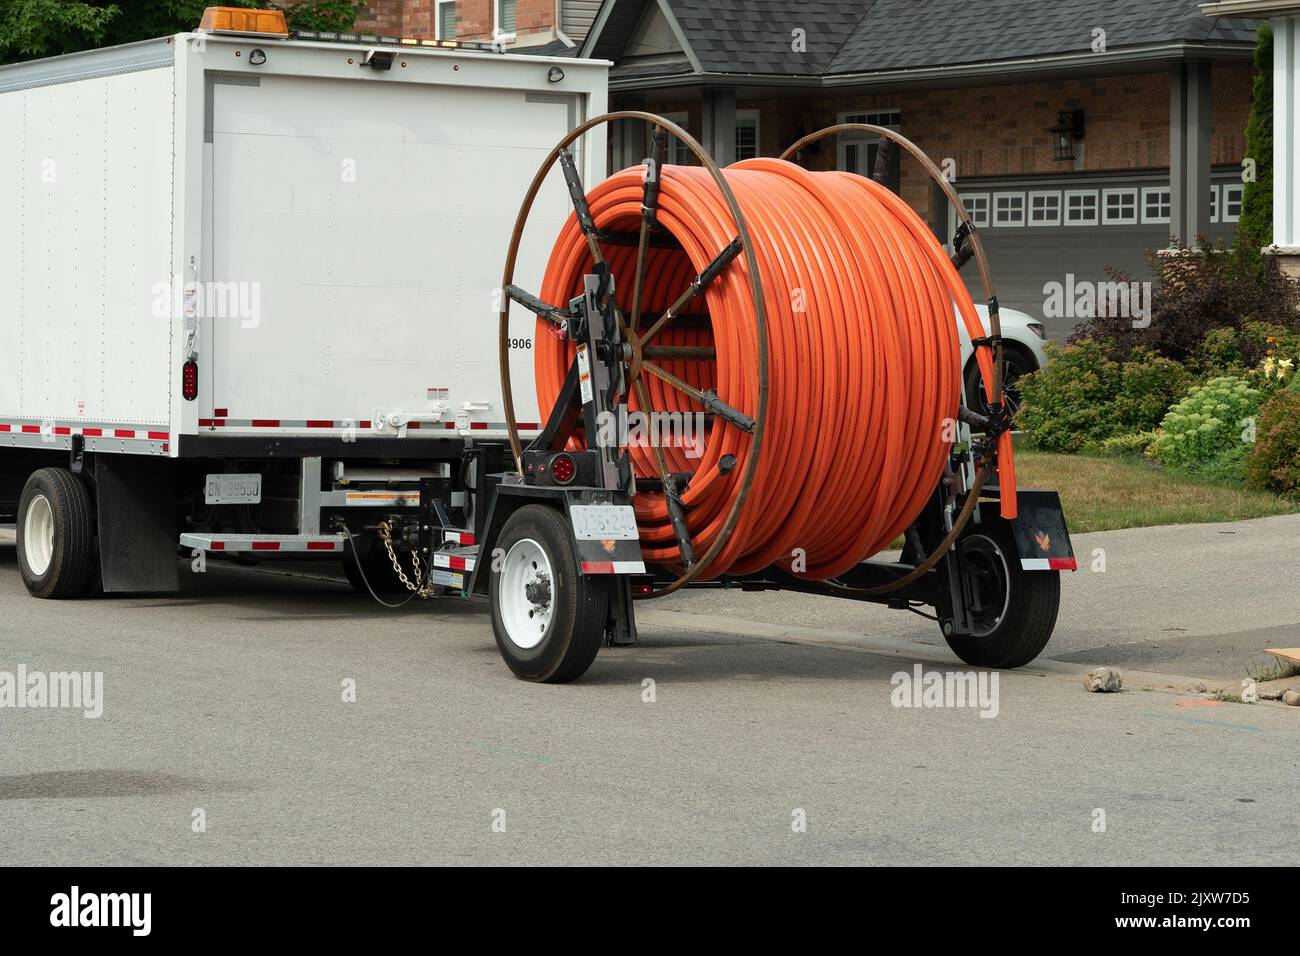 https://c8.alamy.com/comp/2JXW7D5/red-plastic-pipe-for-fiber-optic-cable-on-trailer-reel-2JXW7D5.jpg